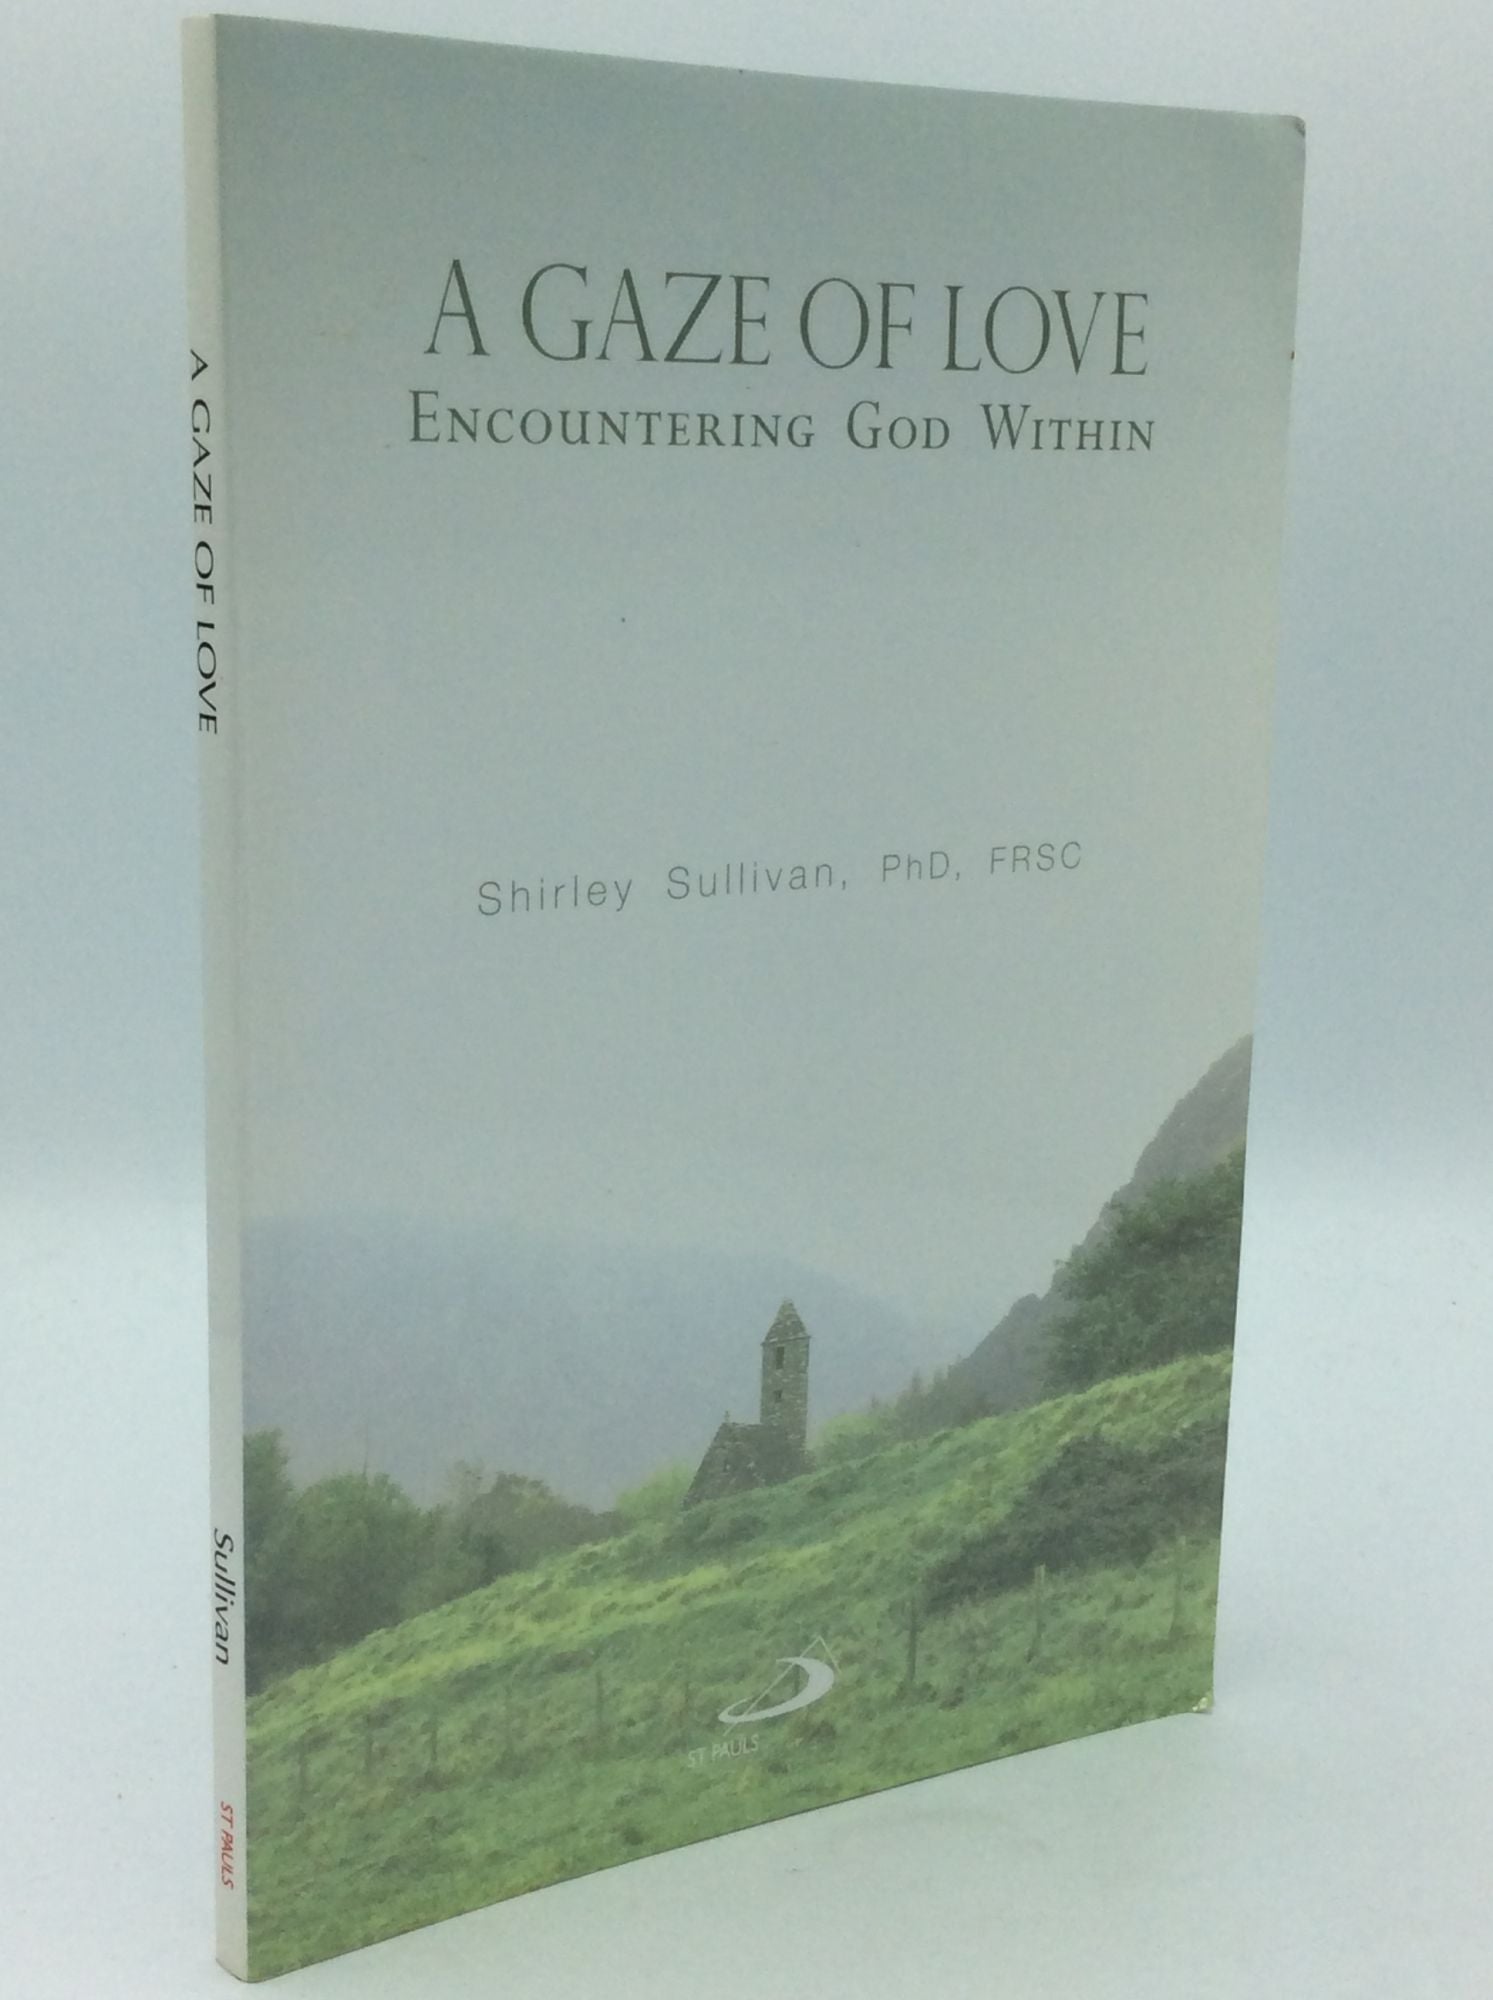 Shirley Sullivan - A Gaze of Love: Encountering God Within